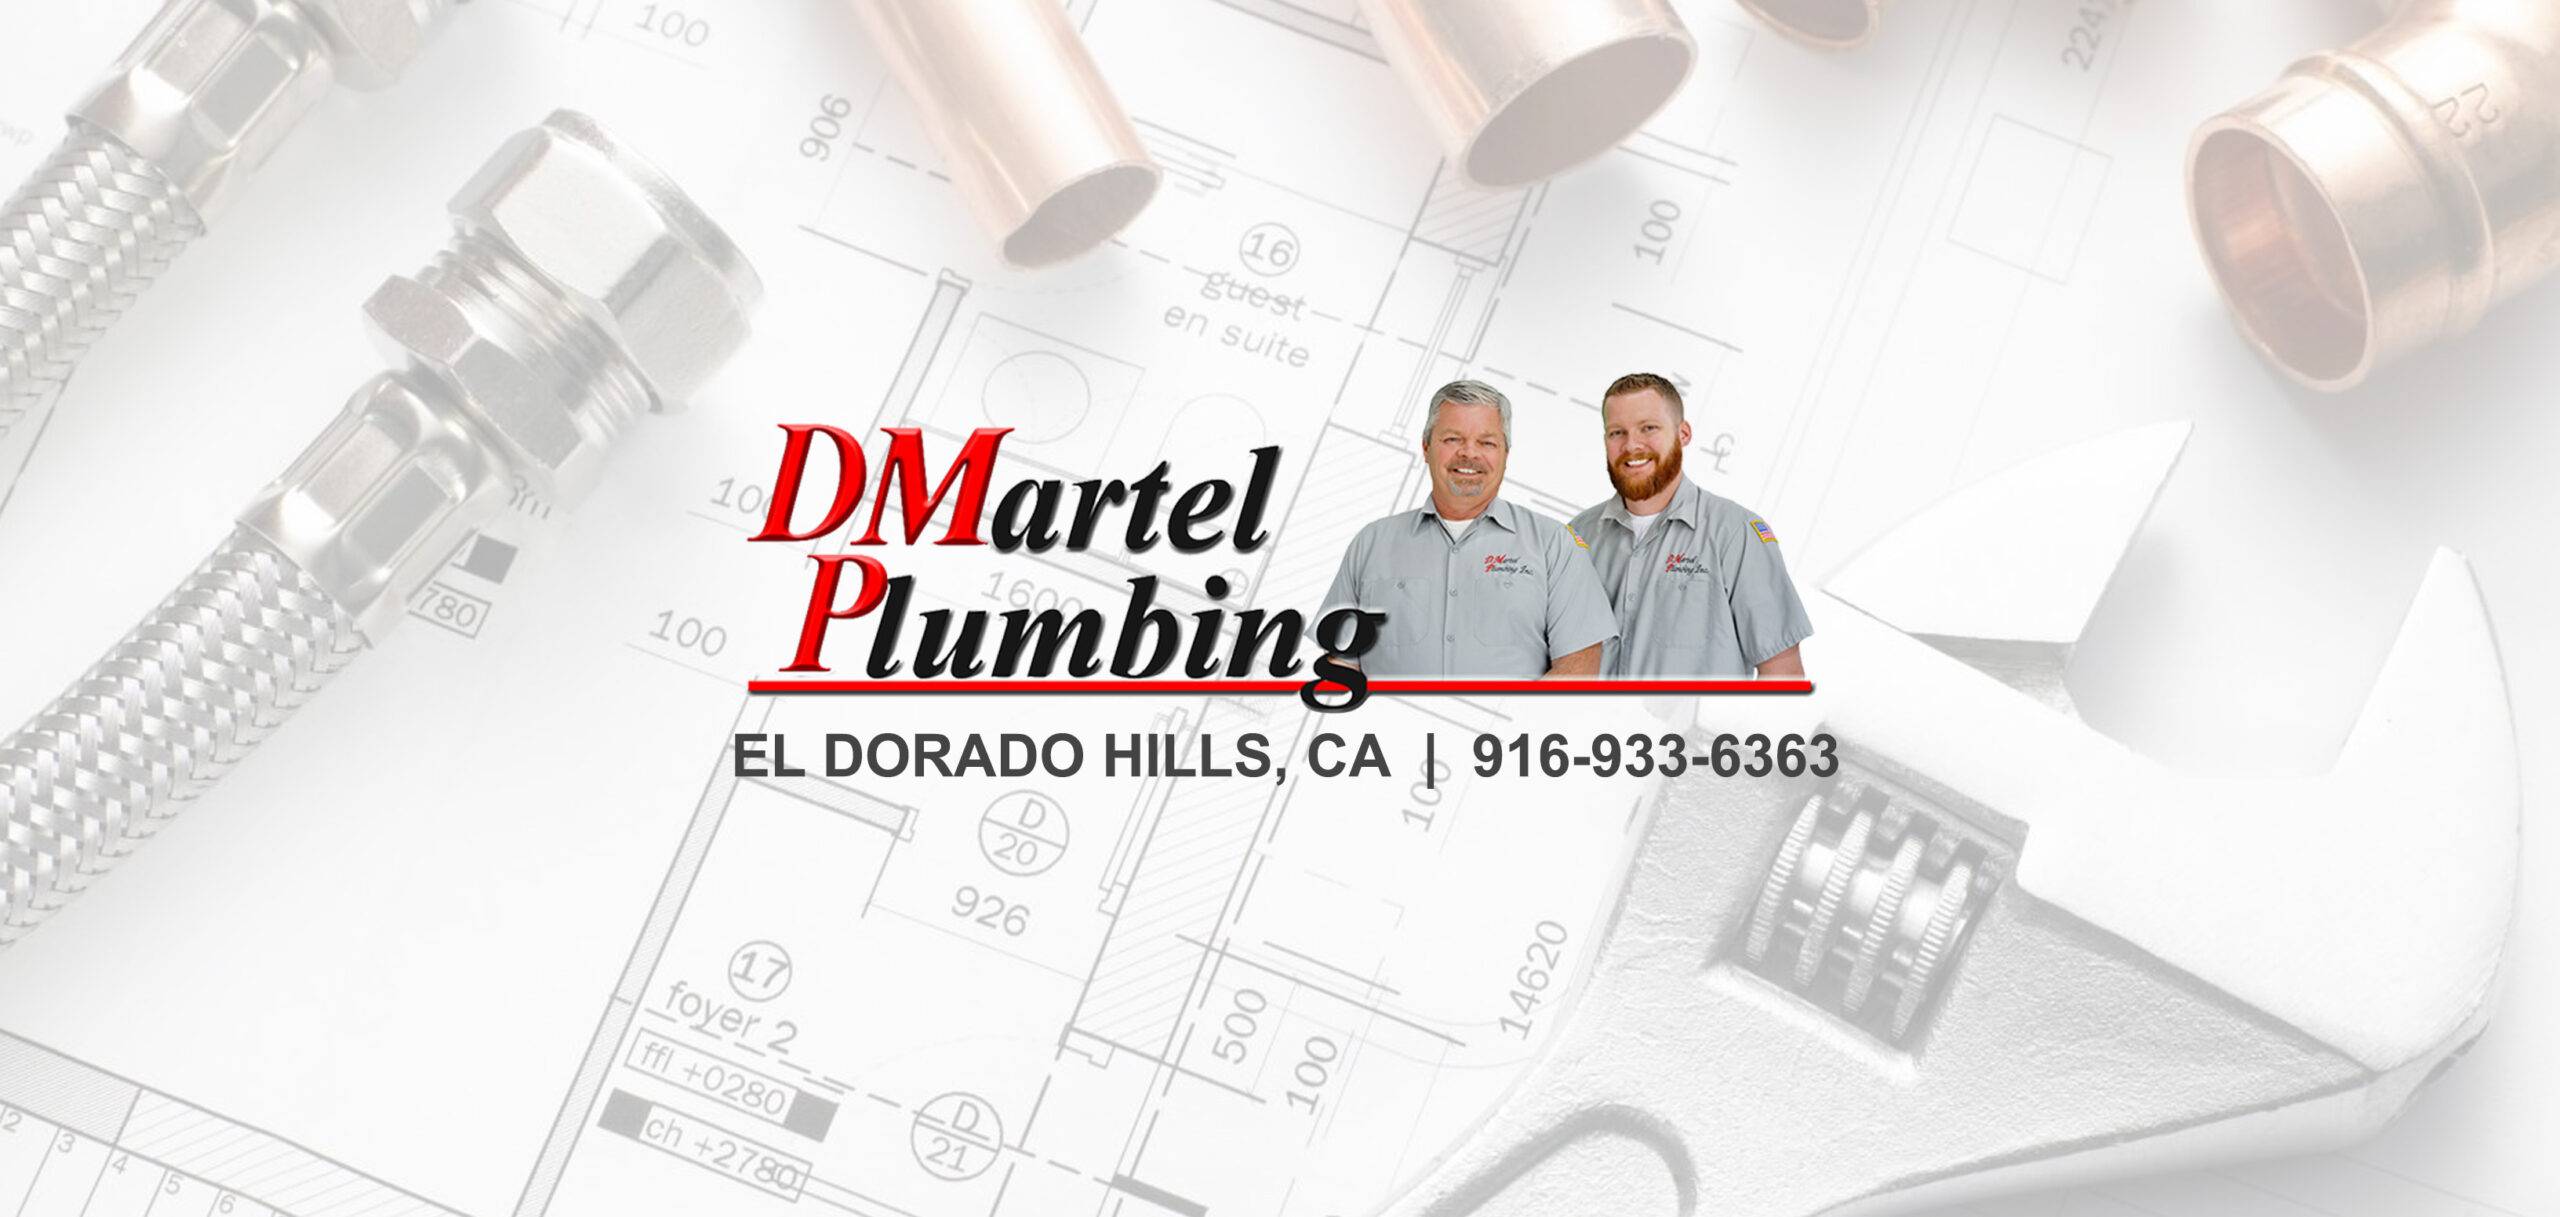 El Dorado Hills Plumbing Service Scaled 